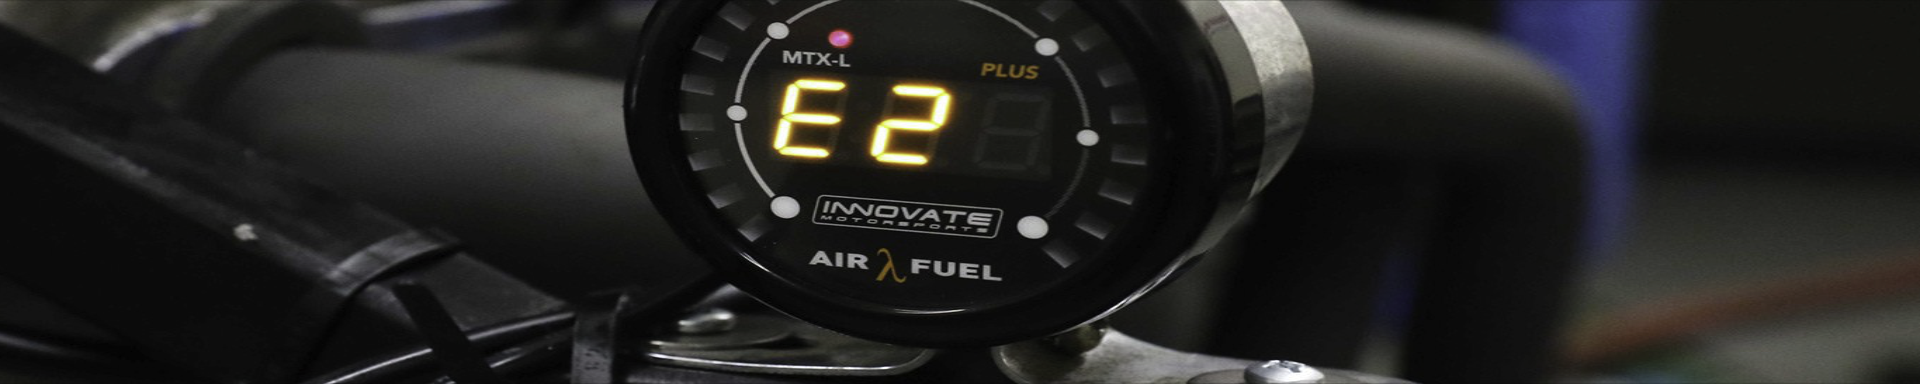 Air Fuel Ratio Gauges | GarageAndFab.com | Munro Industries gf-100103050501